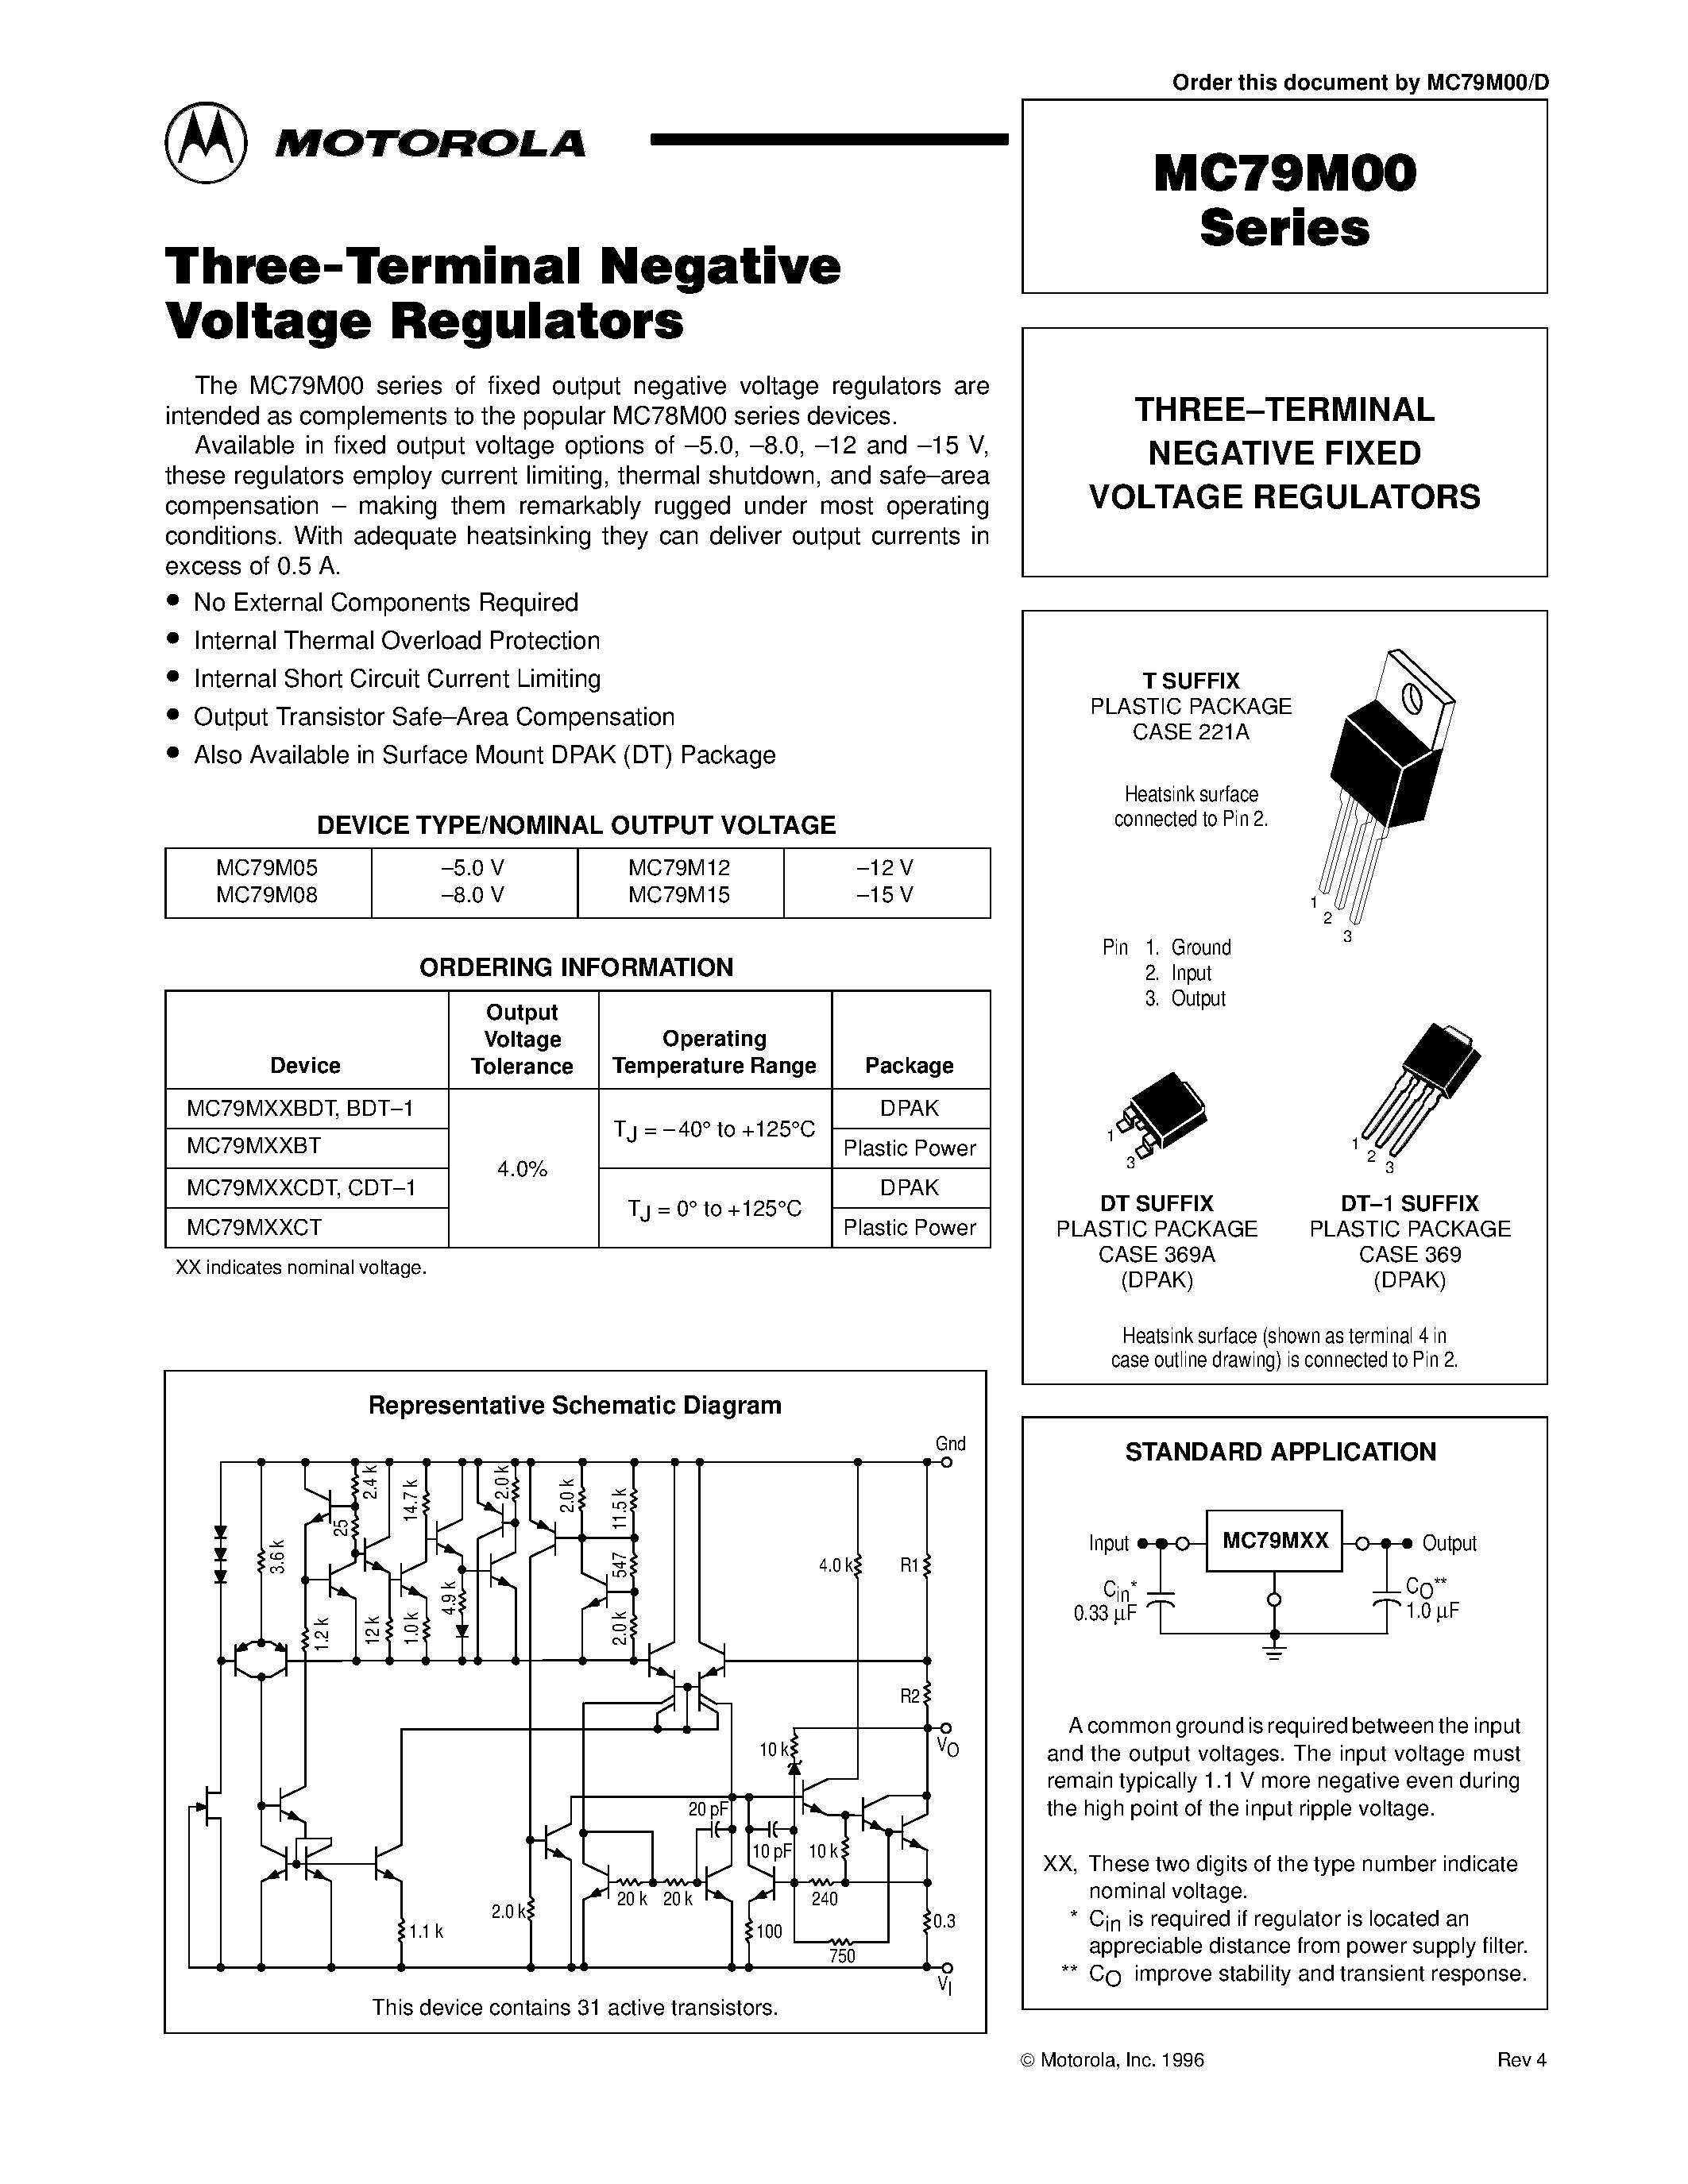 Datasheet MC79M15BDT - THREE-TERMINAL NEGATIVE FIXED VOLTAGE REGULATORS page 1